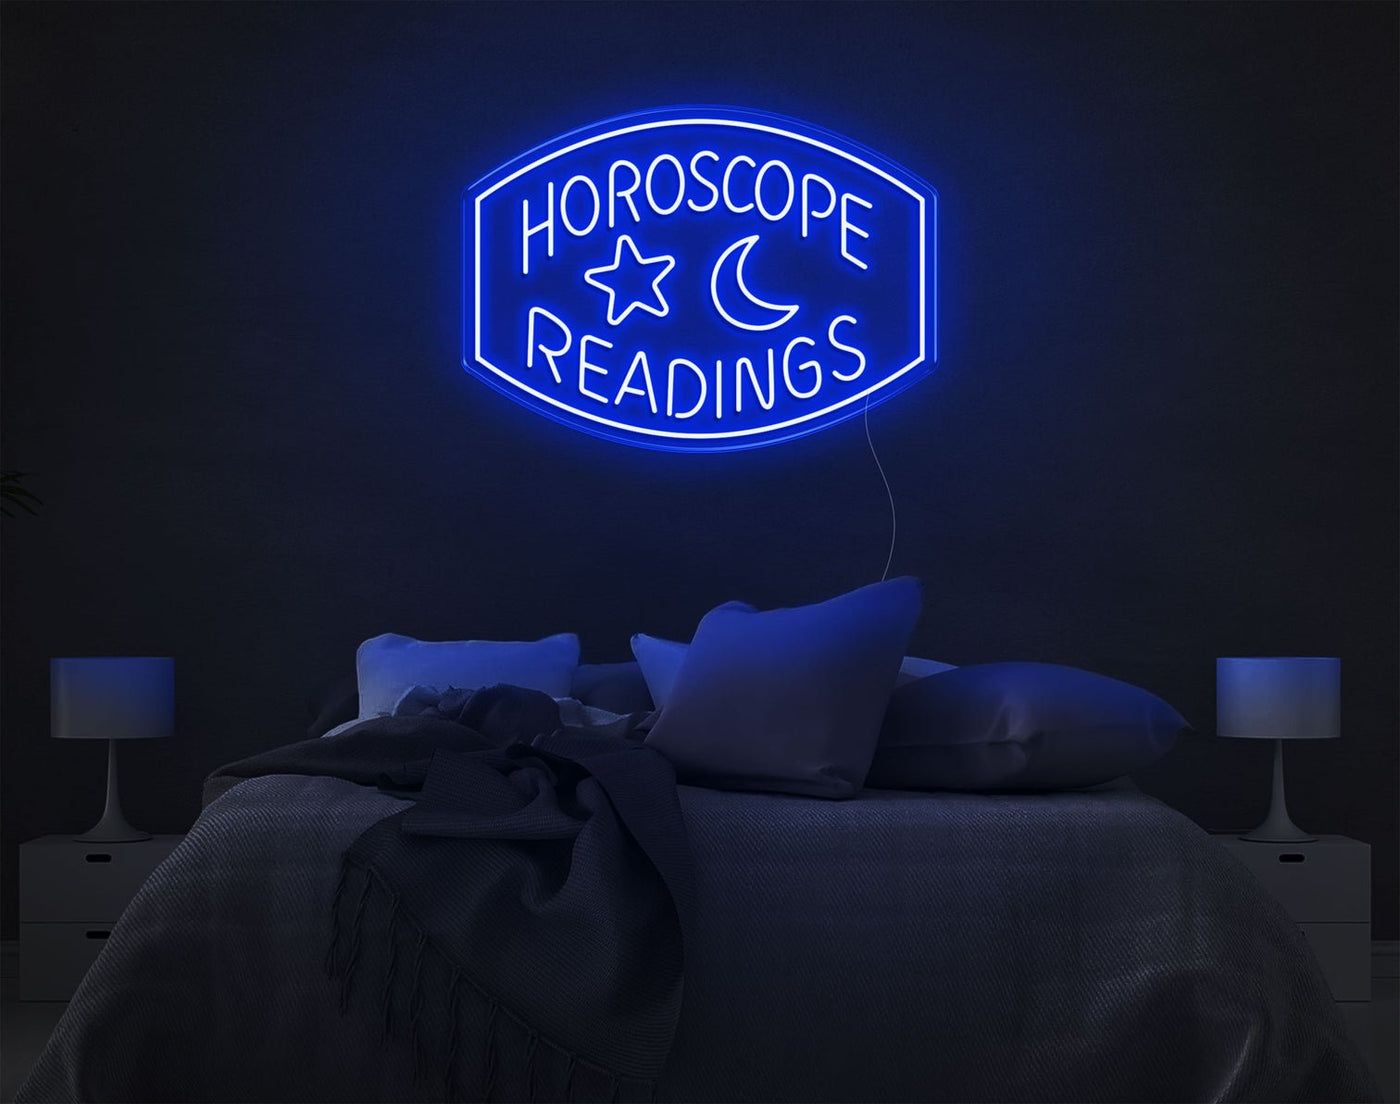 Horoscope Readings LED Neon Sign - 20inch x 28inchBlue